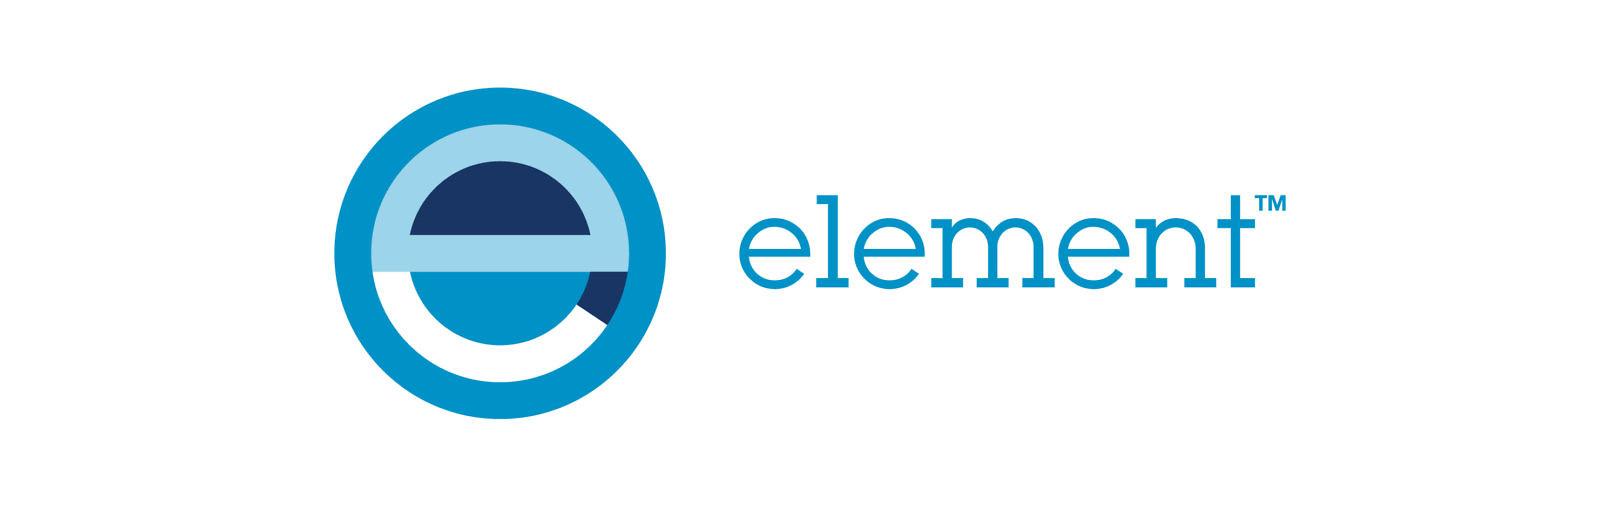 Old Element Logo - Element